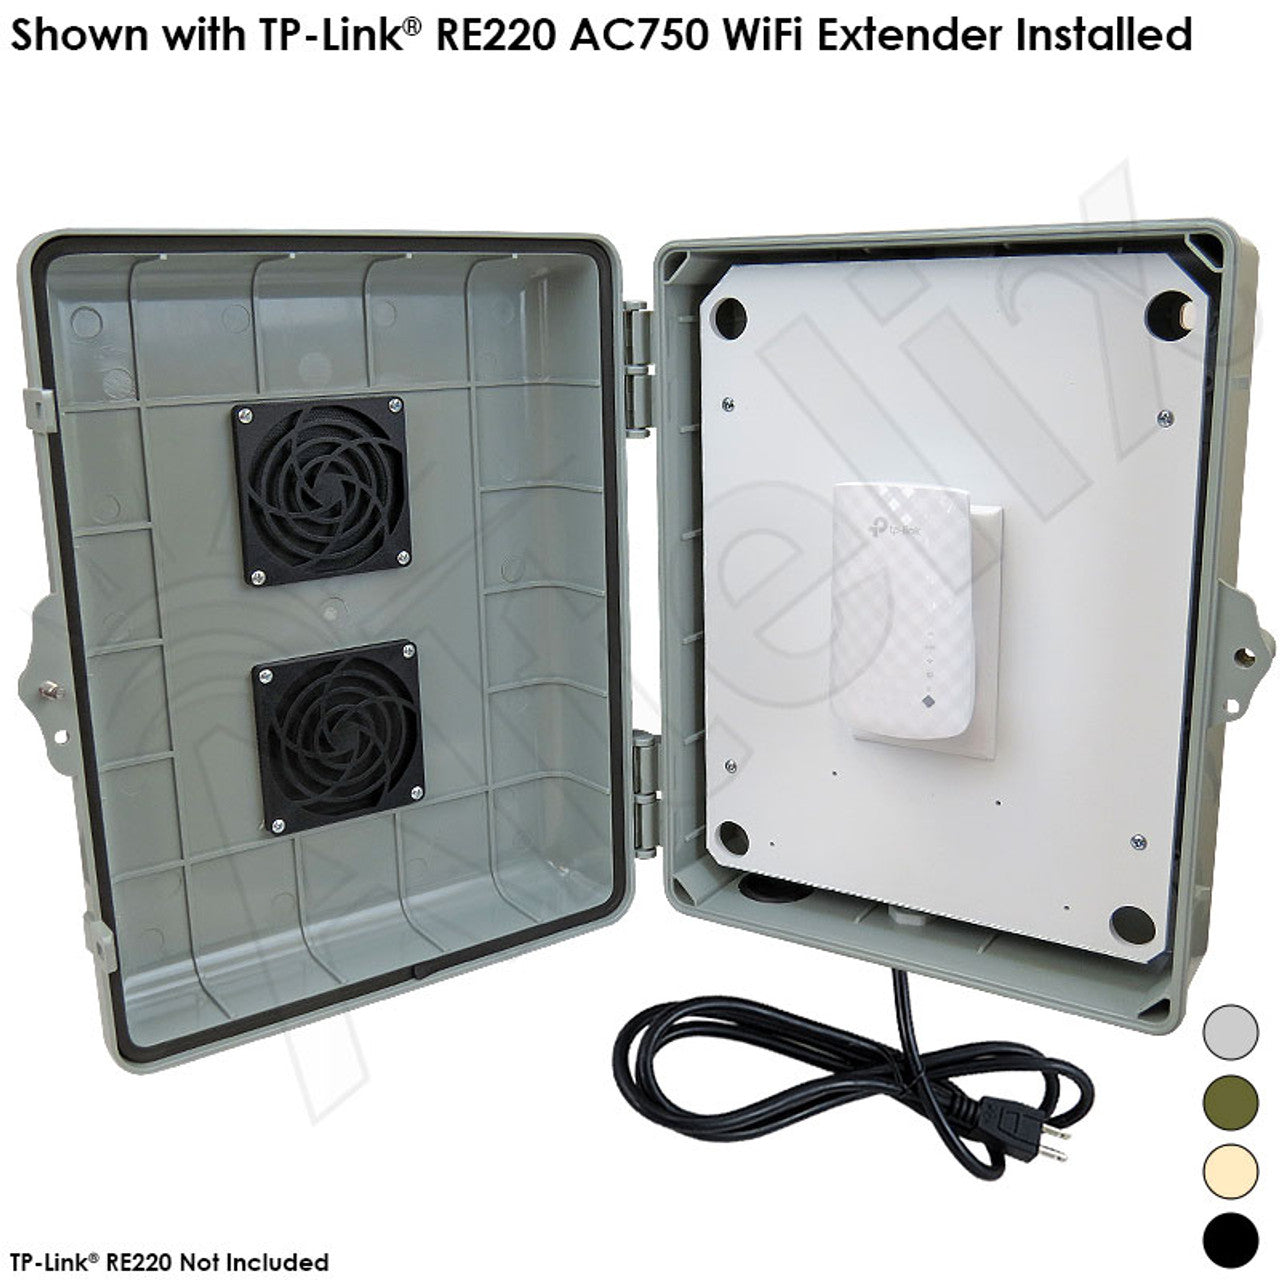 Altelix Weatherproof Vented WiFi Enclosure for TP-Link® RE220 AC750 WiFi Extender-1